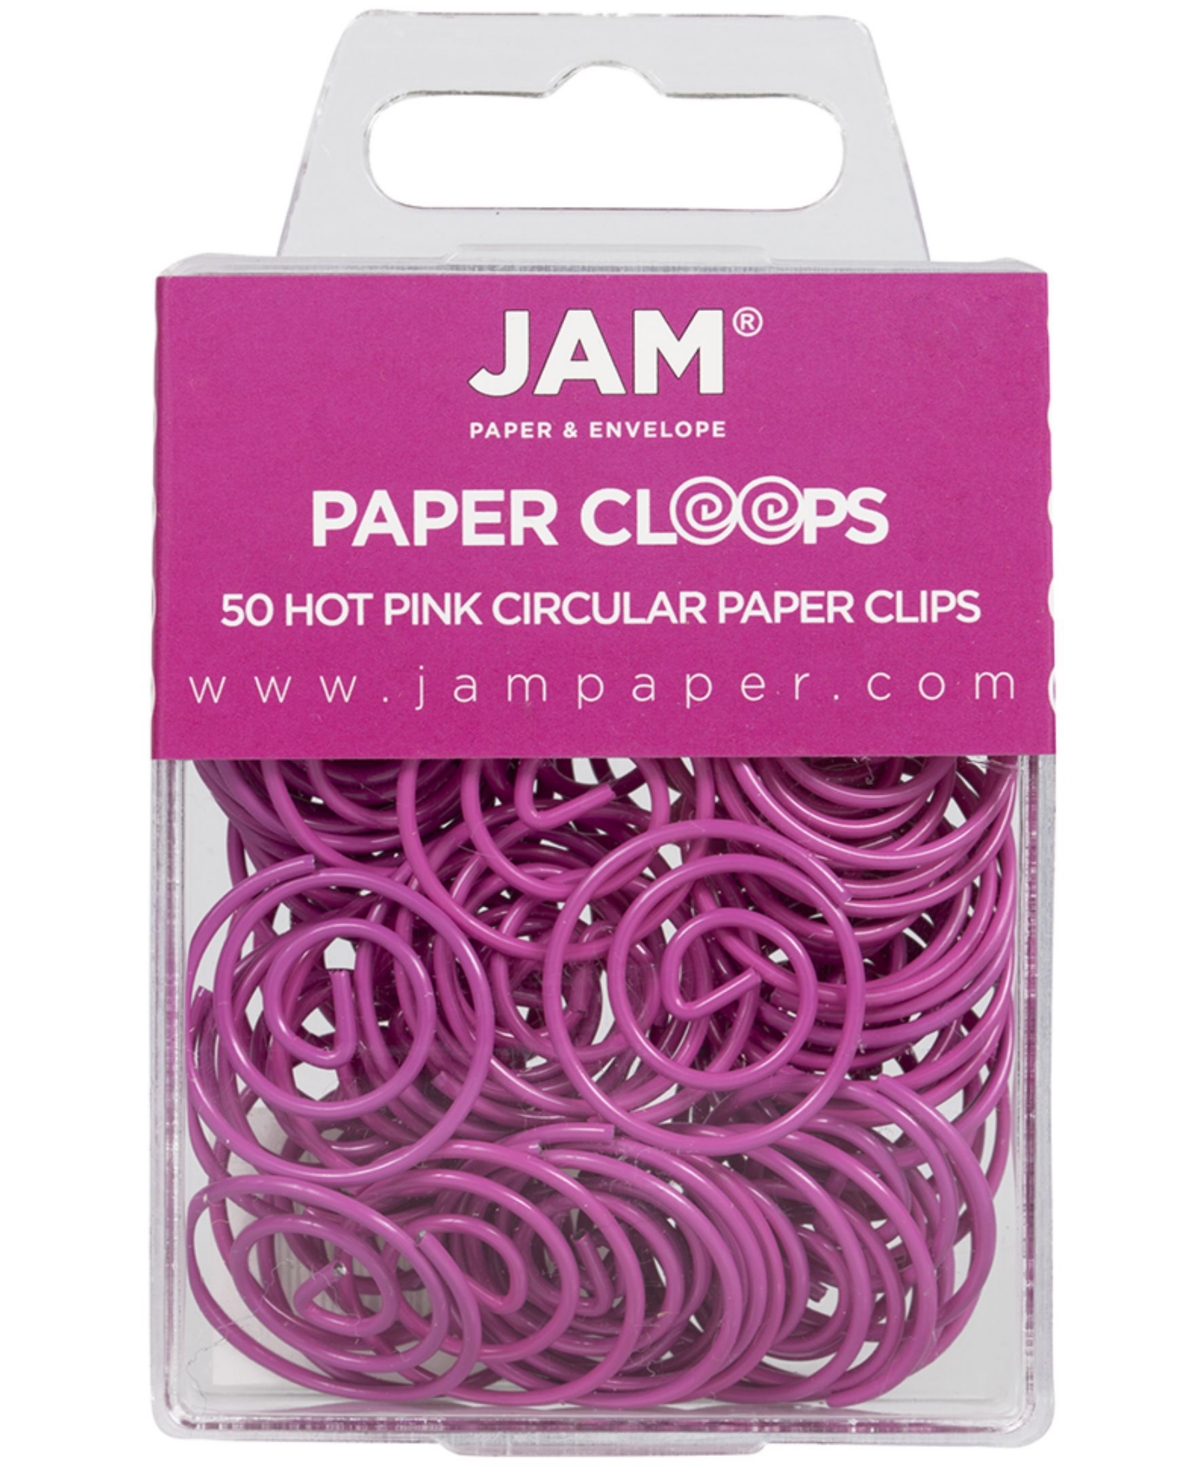 Jam Paper Circular Paper Clips In Hot Pink